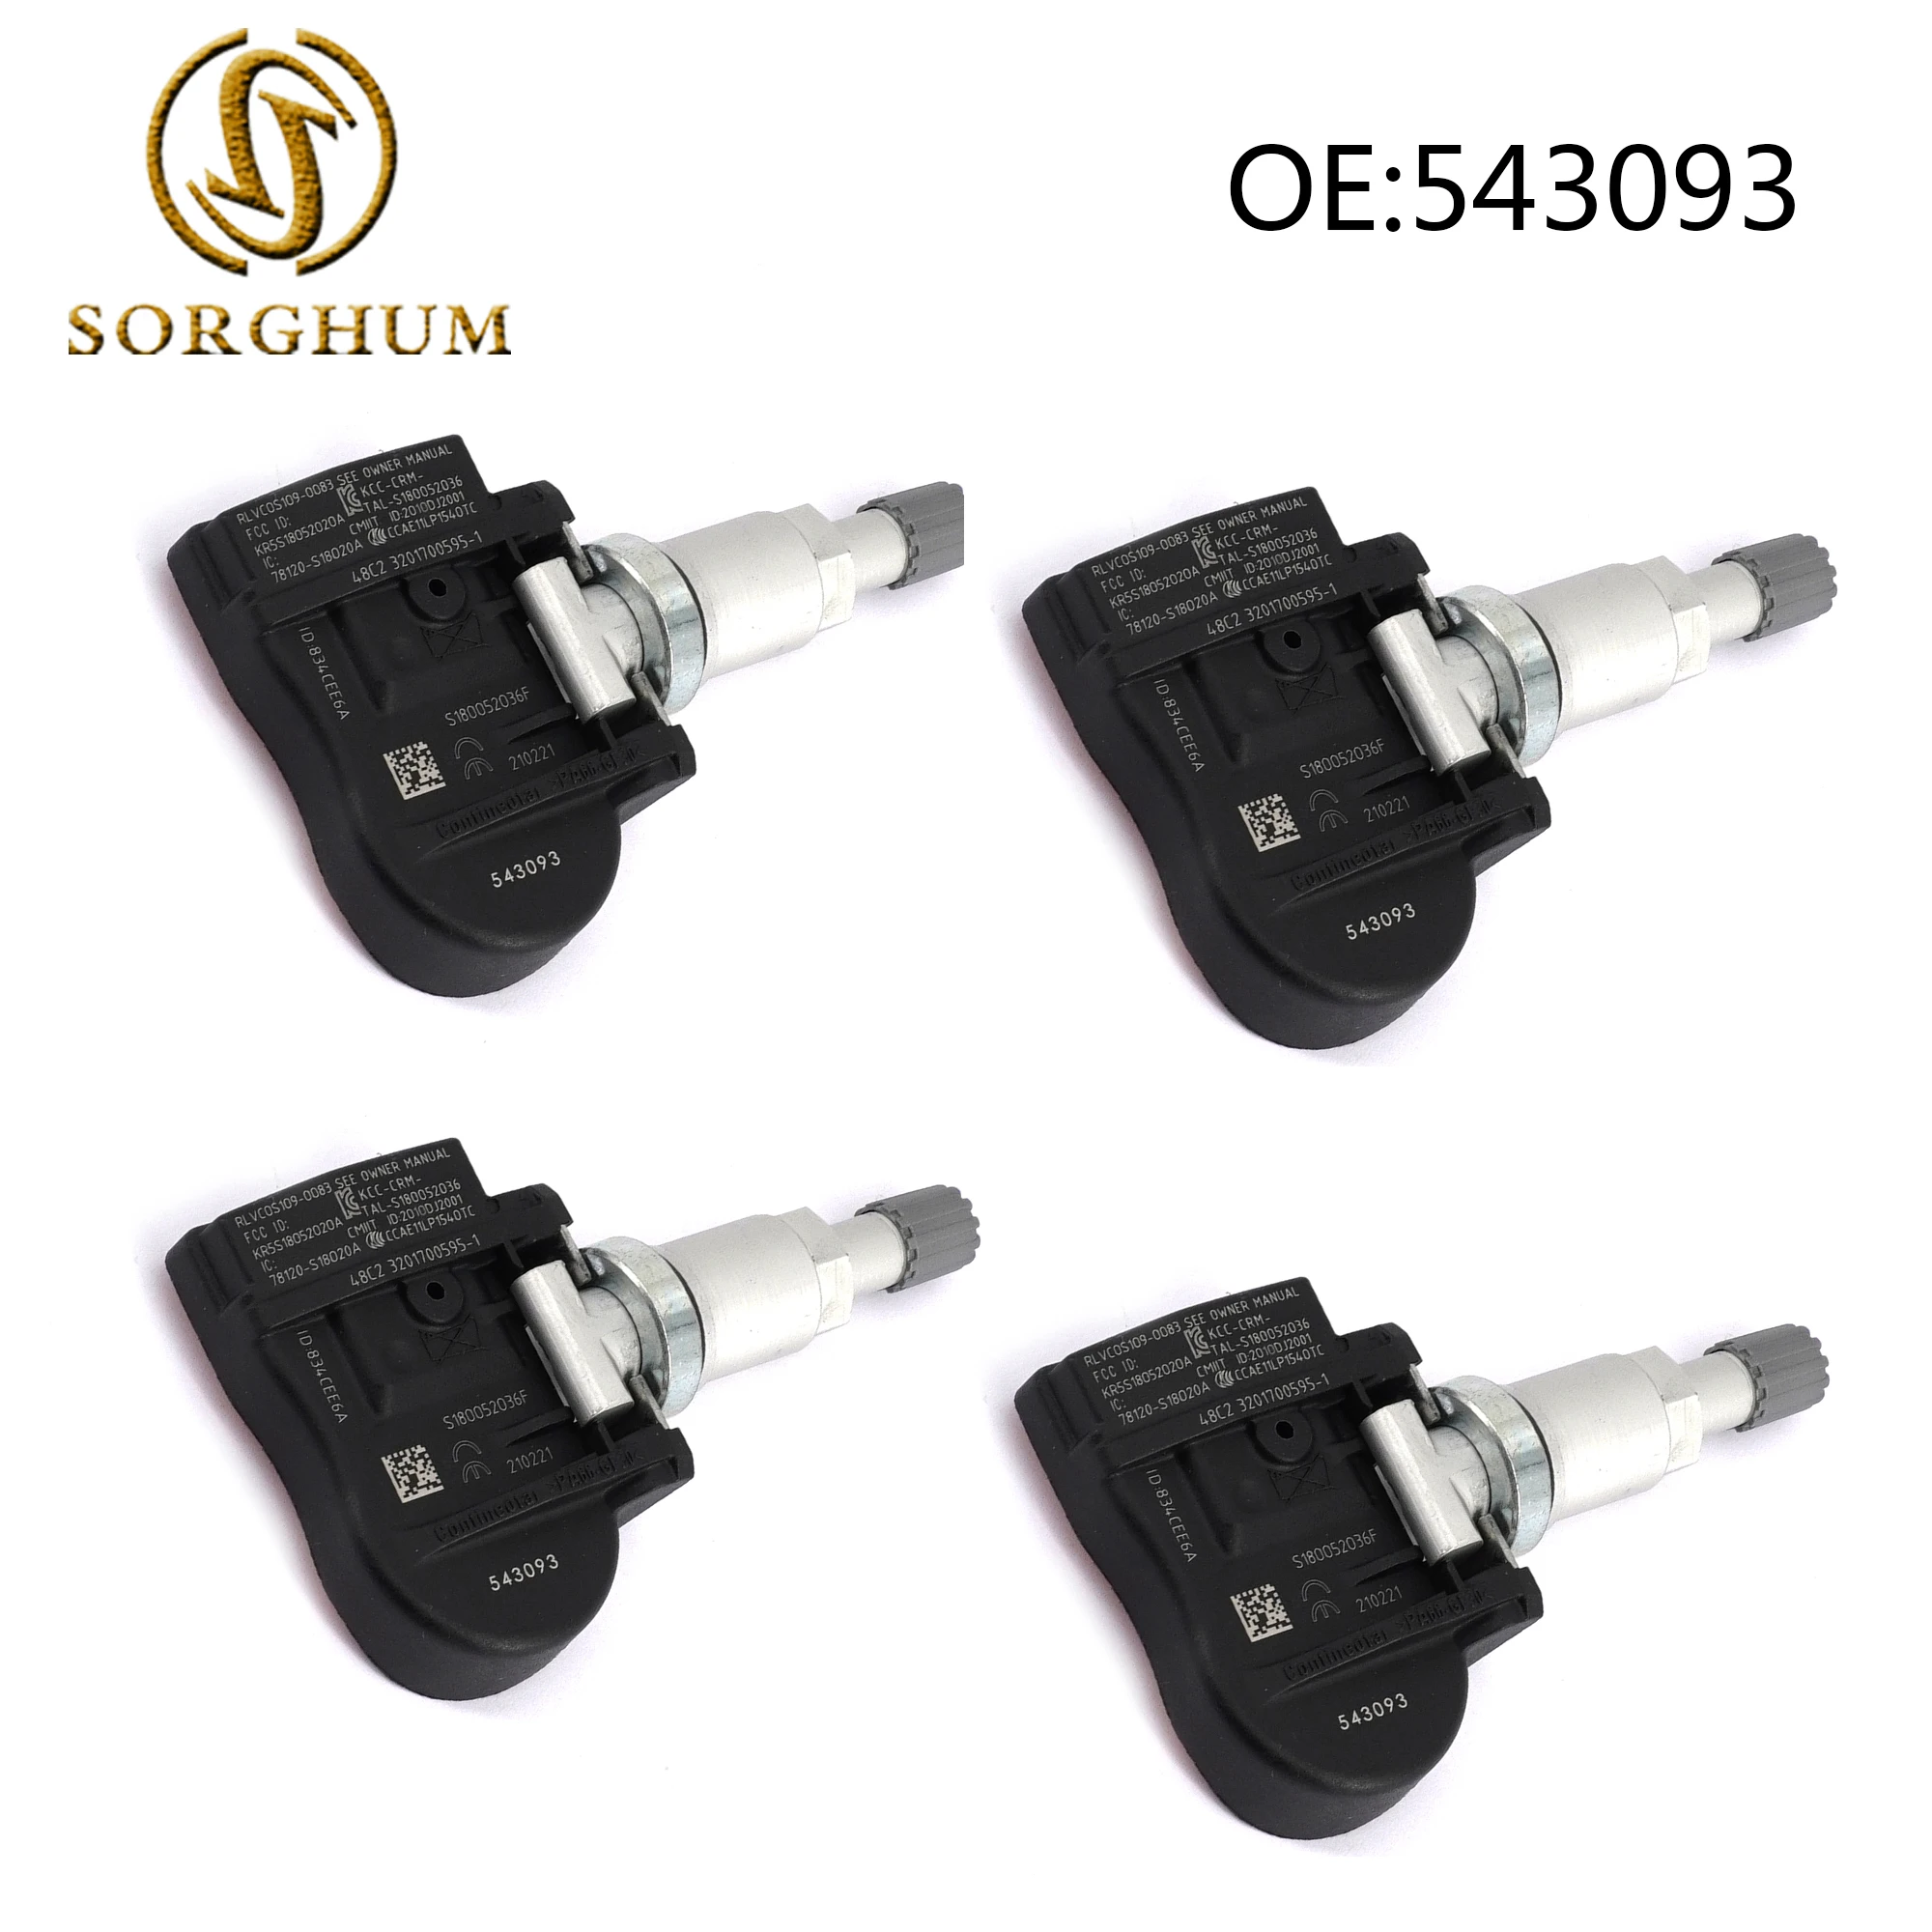 

SORGHUM 4 PCS TPMS Tire Pressure Monitor Sensor For Citroen C4 C5 C6 C8 For Peugeot 508 607 543093 5430T4 9673198580 9656822980